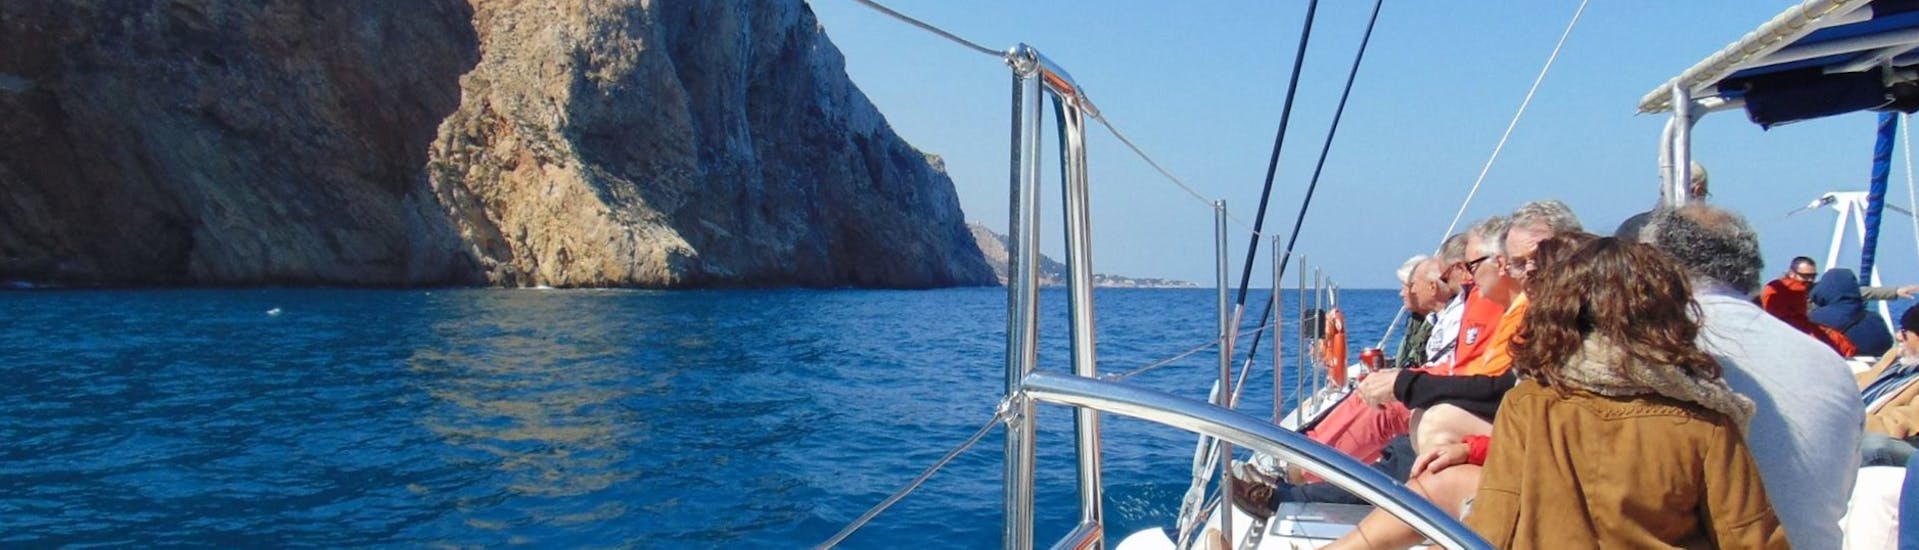 Participantes divirtiéndose a bordo de un eco catamarán de vela durante un paseo en velero por la Bahía de Málaga con Mundo Marino Costa del Sol.